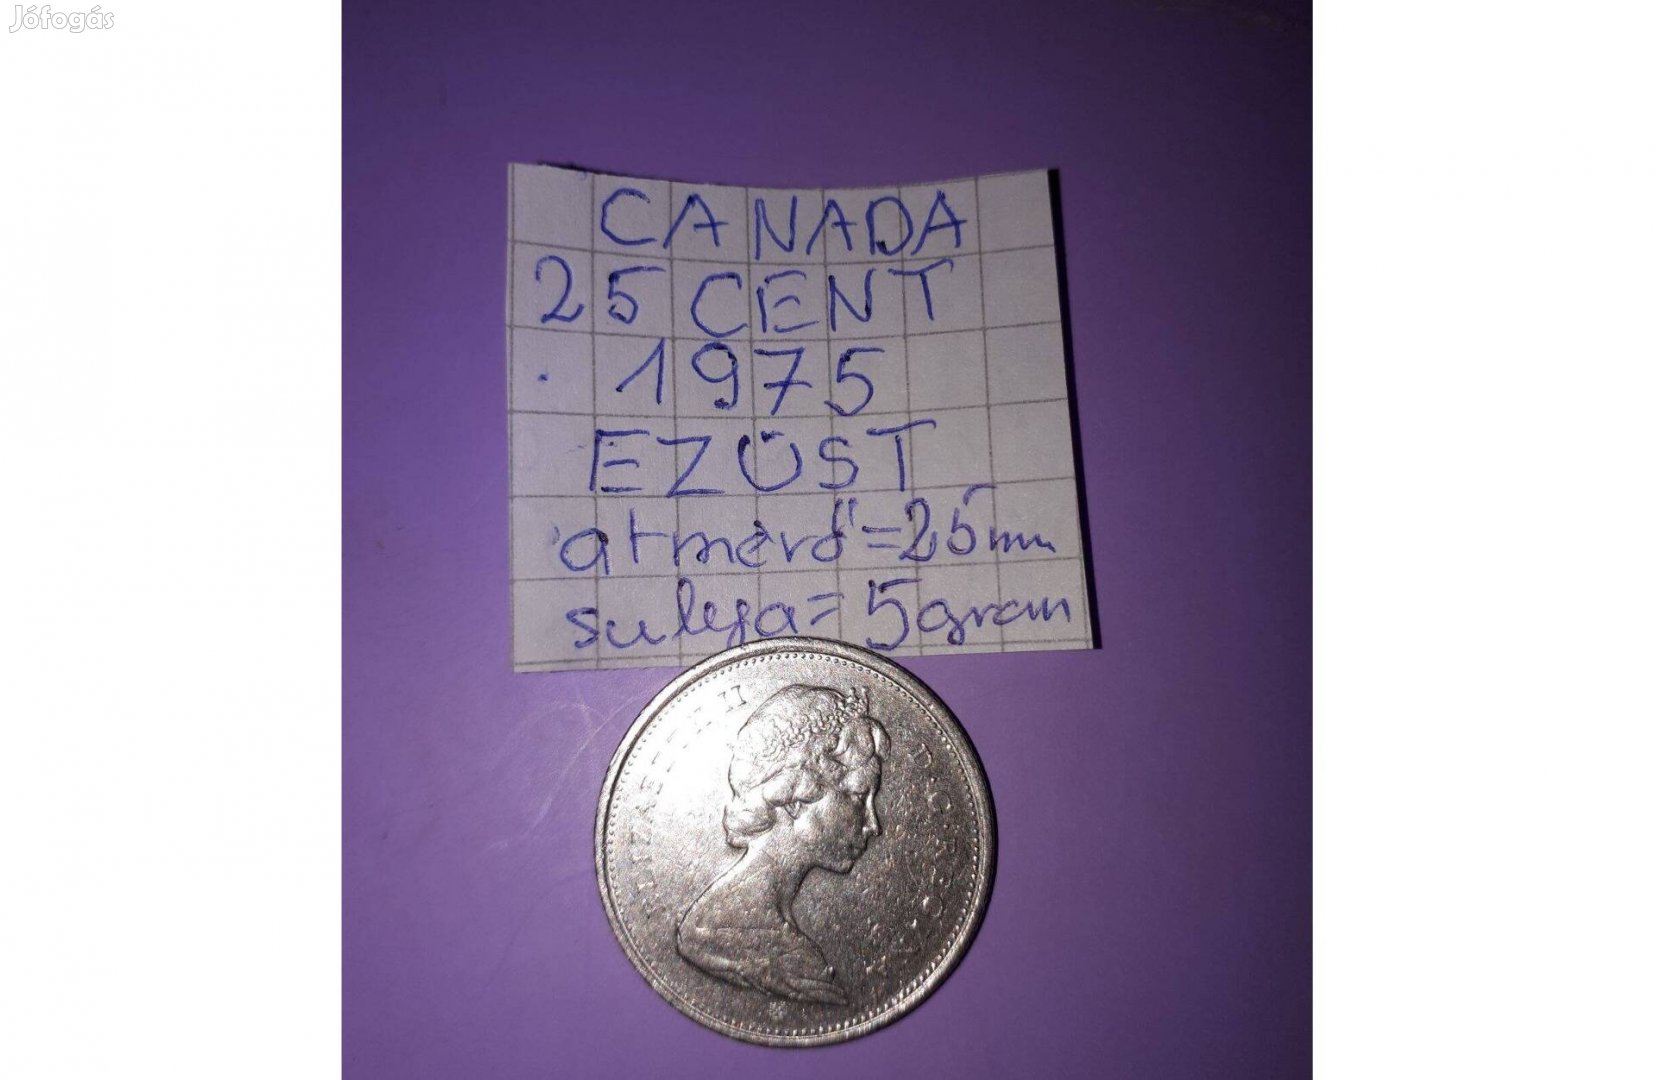 Canada 25 cent 1975 Ezüst